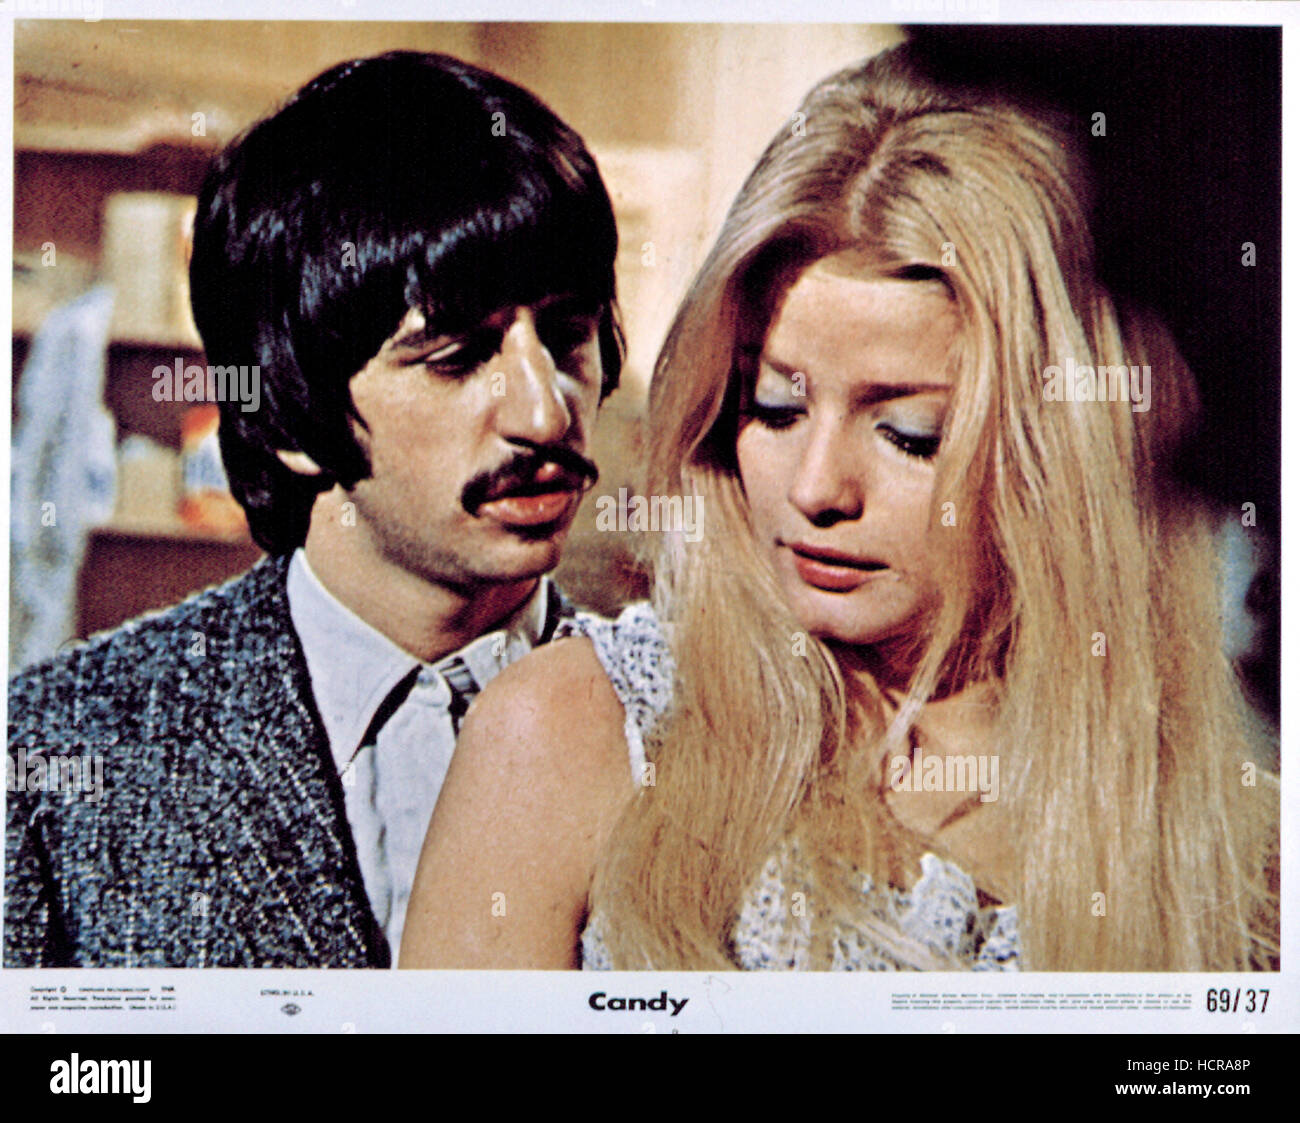 CANDY, Ringo Starr, Ewa Aulin, lobby card, poster art, 1968 Stock Photo